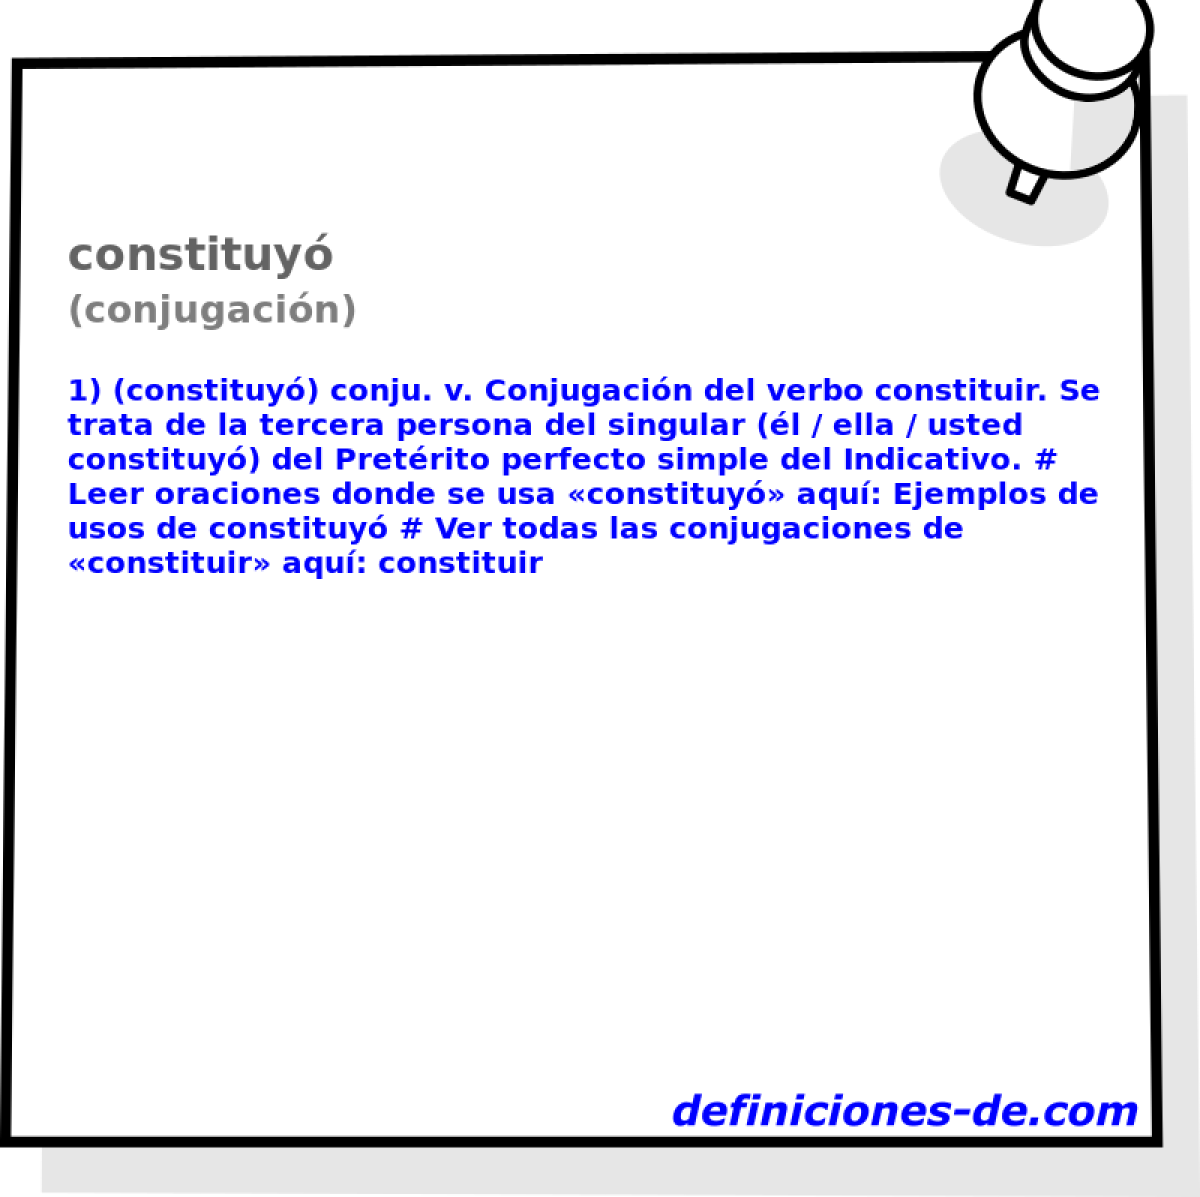 constituy (conjugacin)